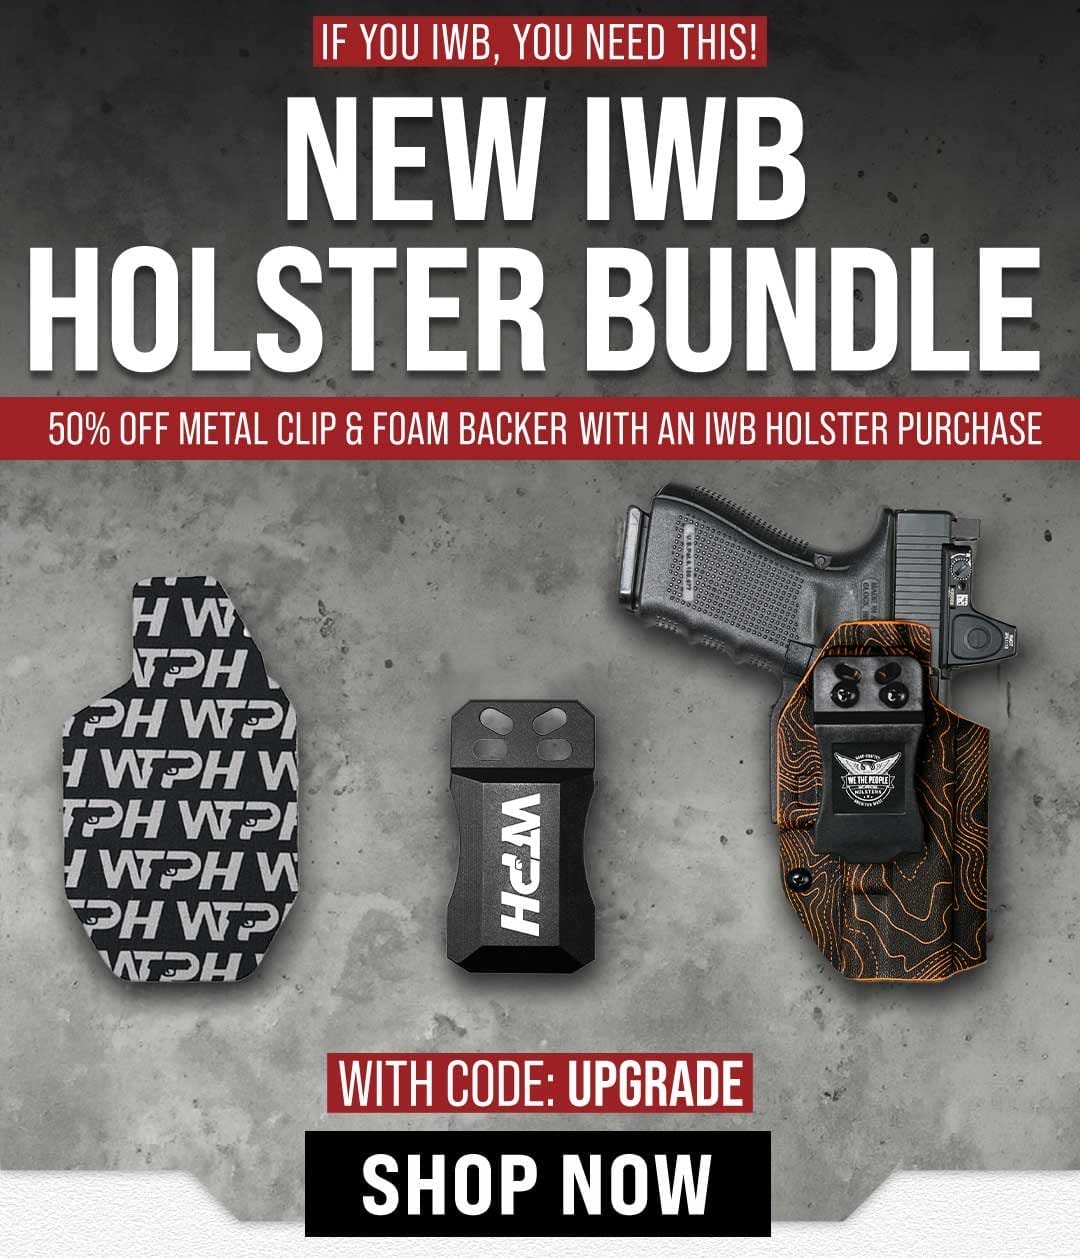 New IWB Holster Bundle